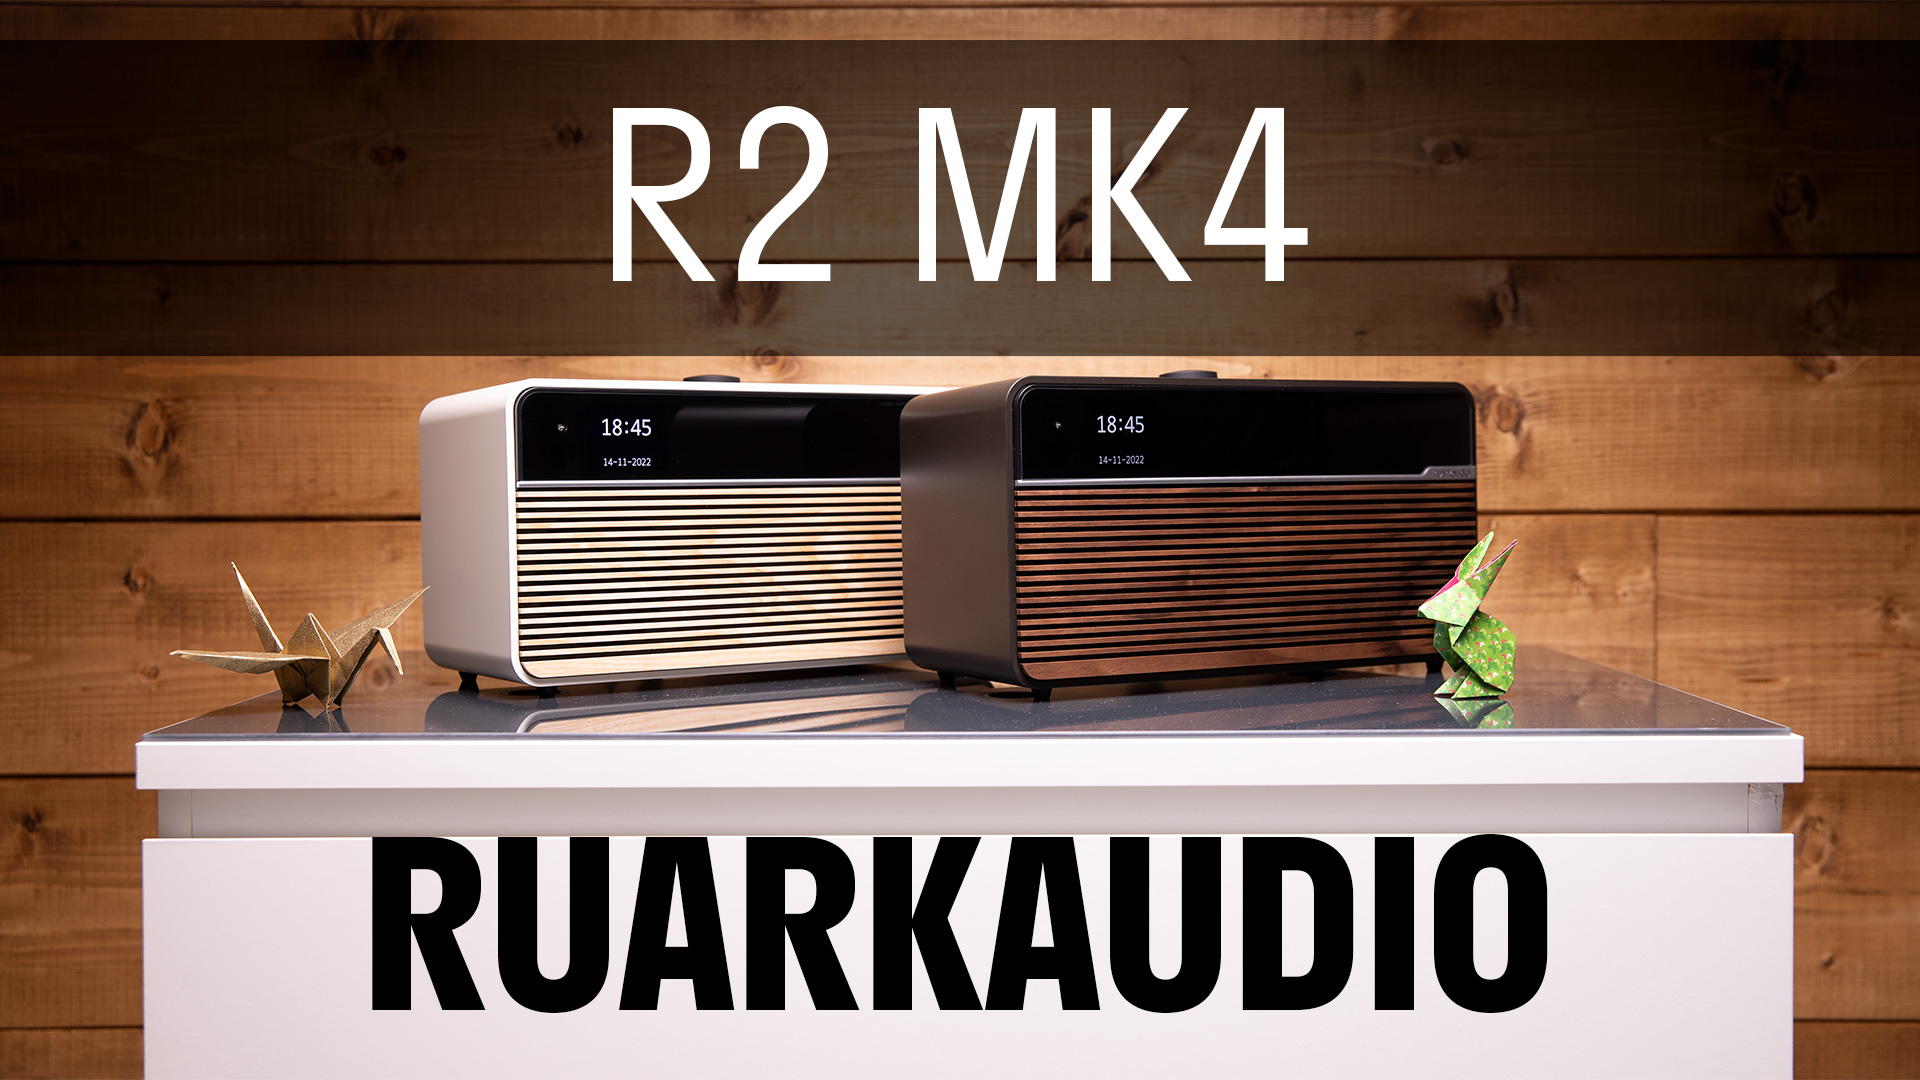 Ruarkaudio R2 mk4